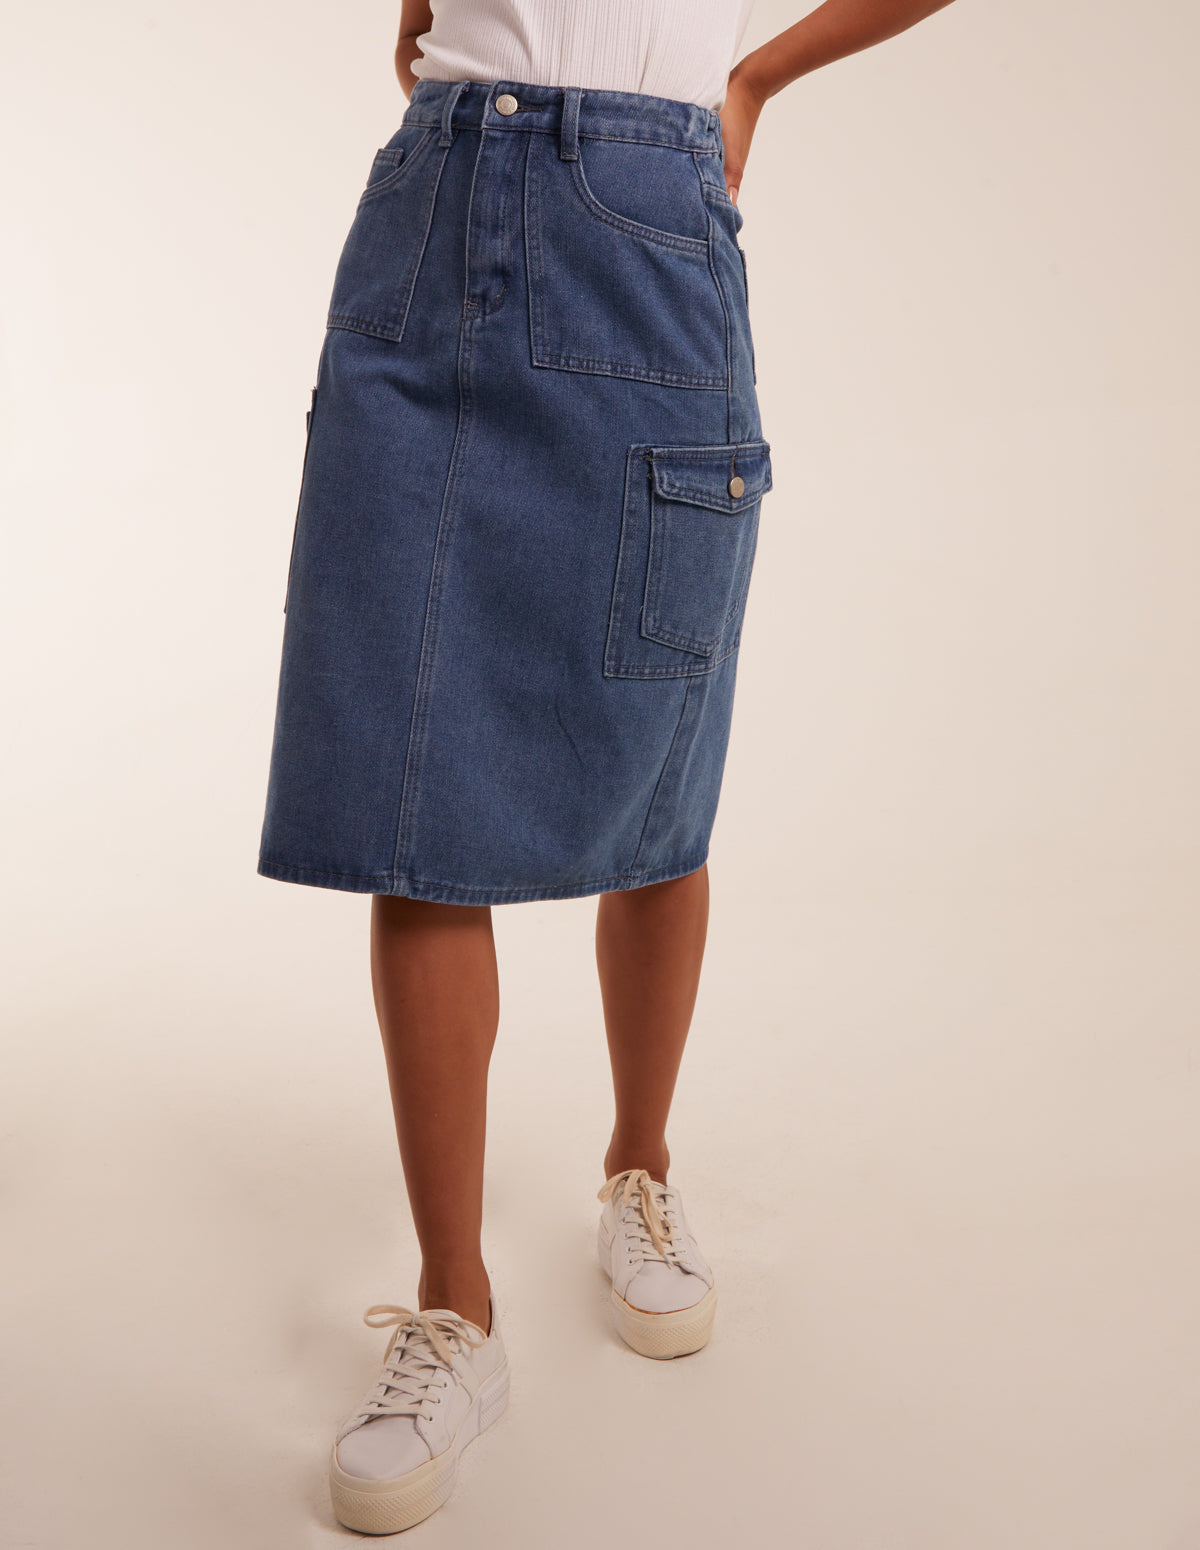 Pocket Denim Skirt - 10 / DENIM